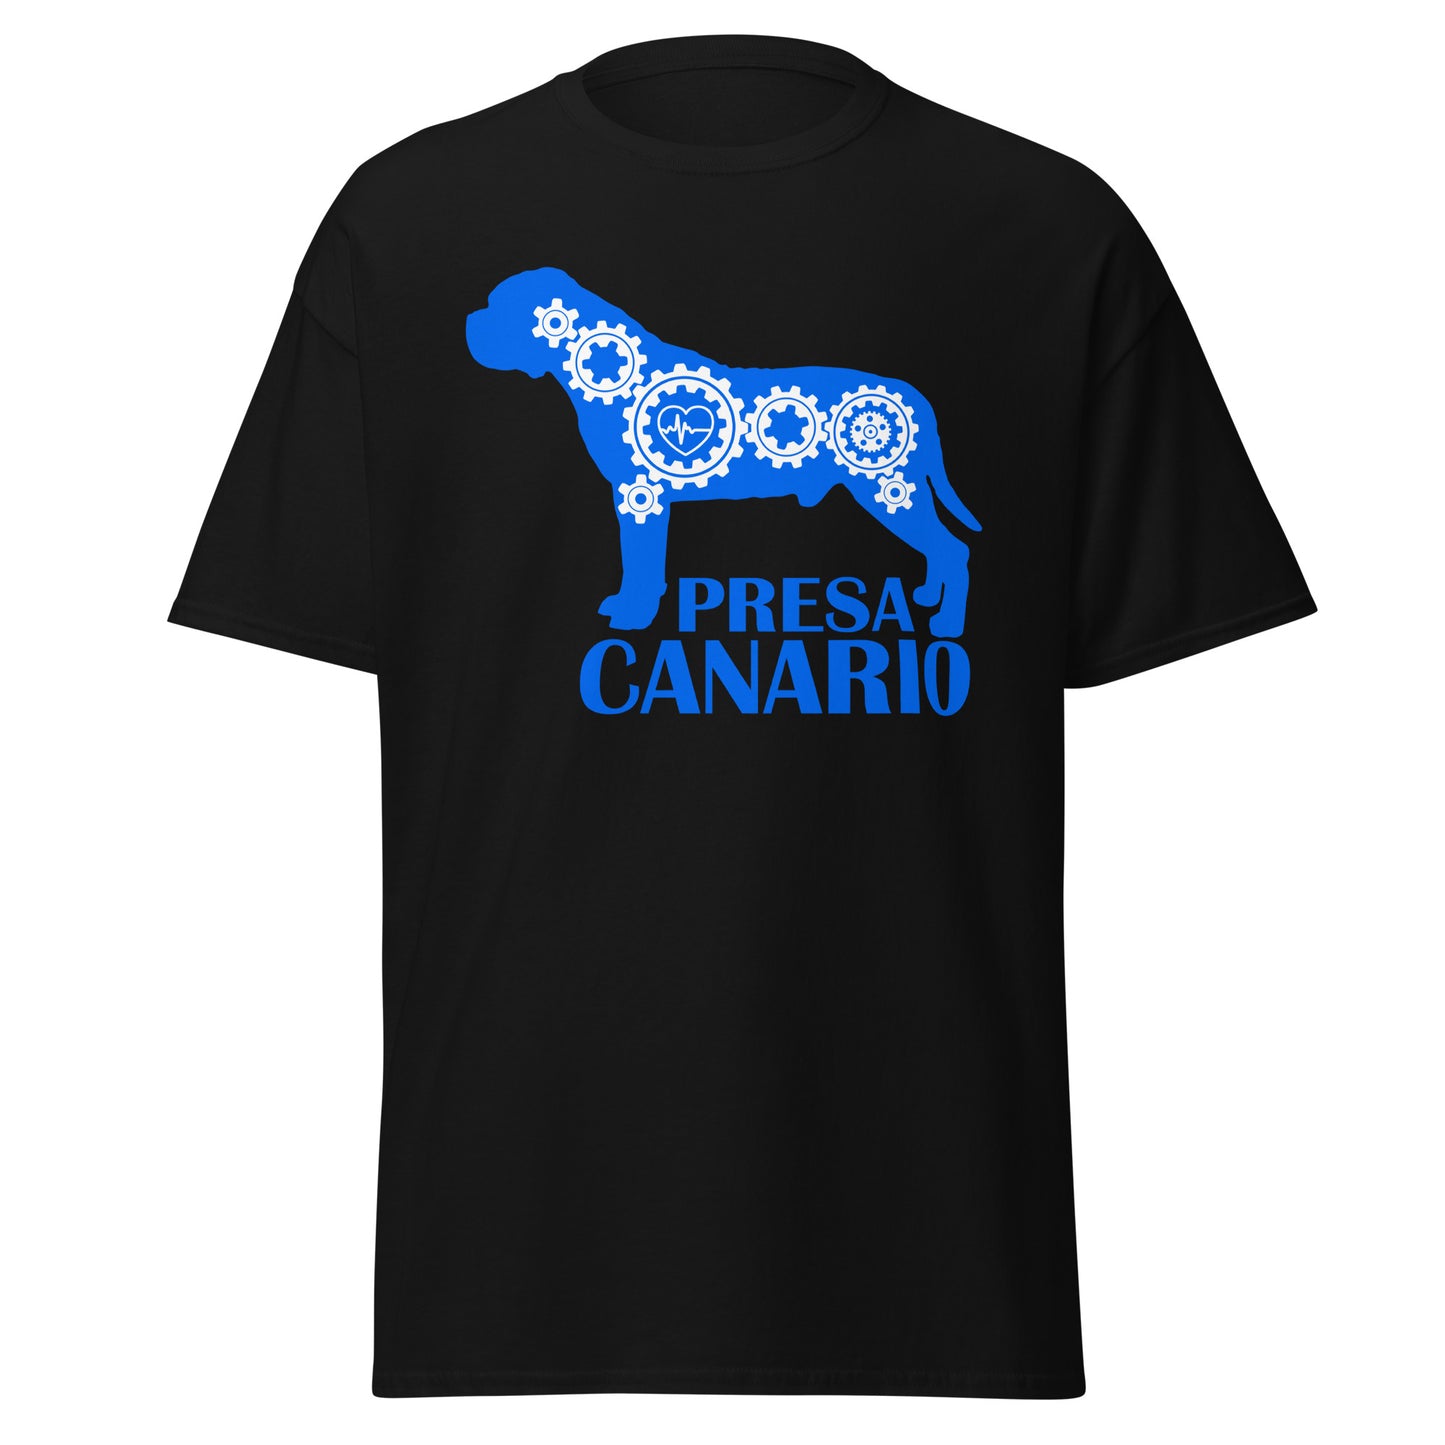 Presa Canario Bionic men’s black t-shirt by Dog Artistry.